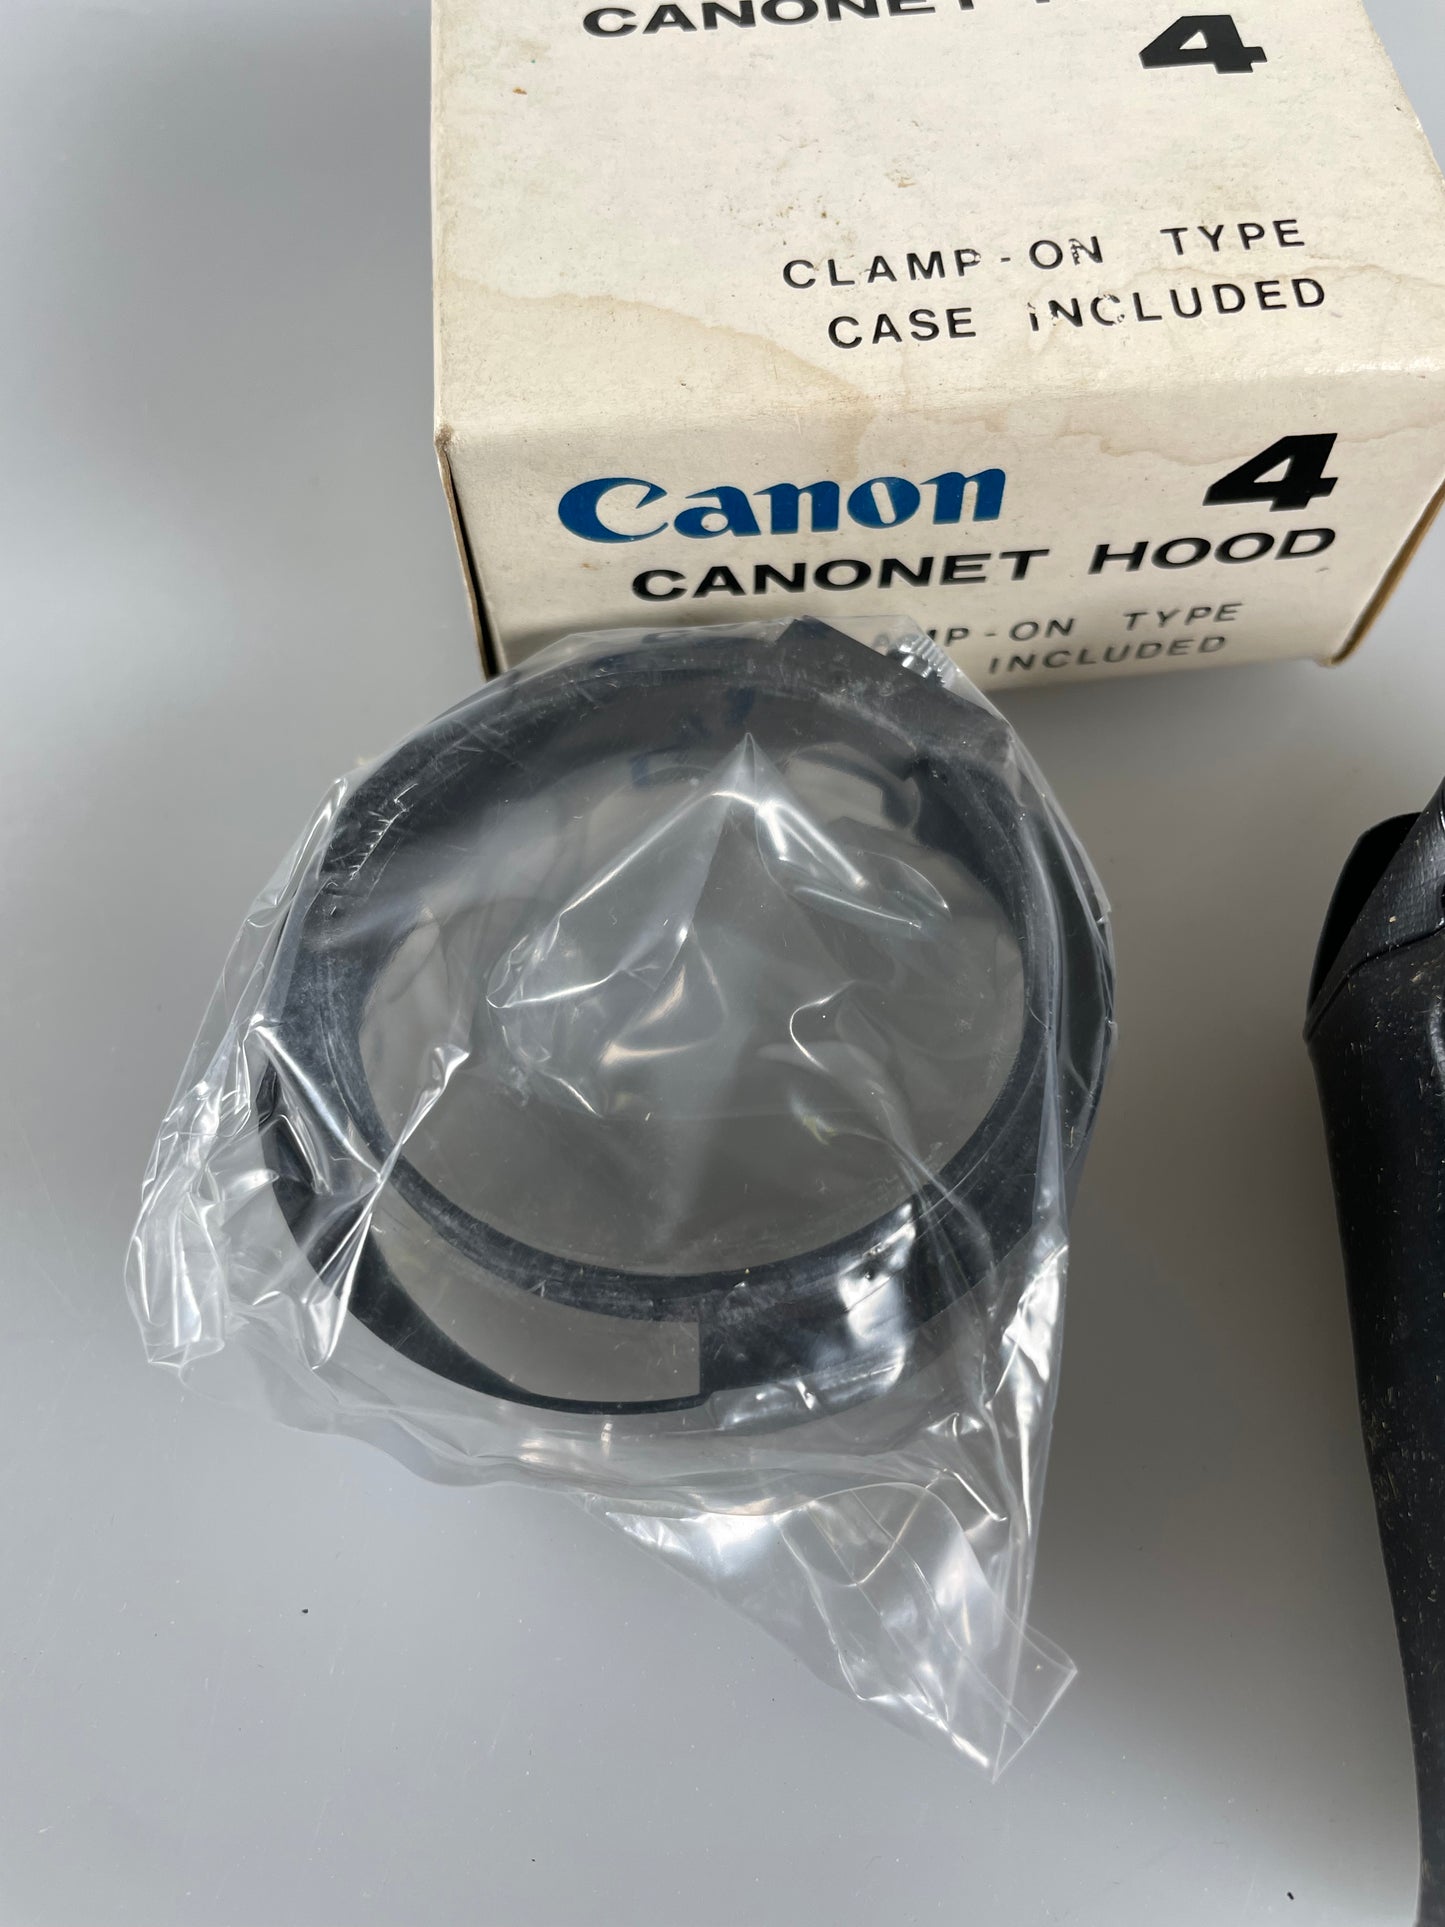 Canon Canonet Hood 4 Lens Shade for QL17 QL19